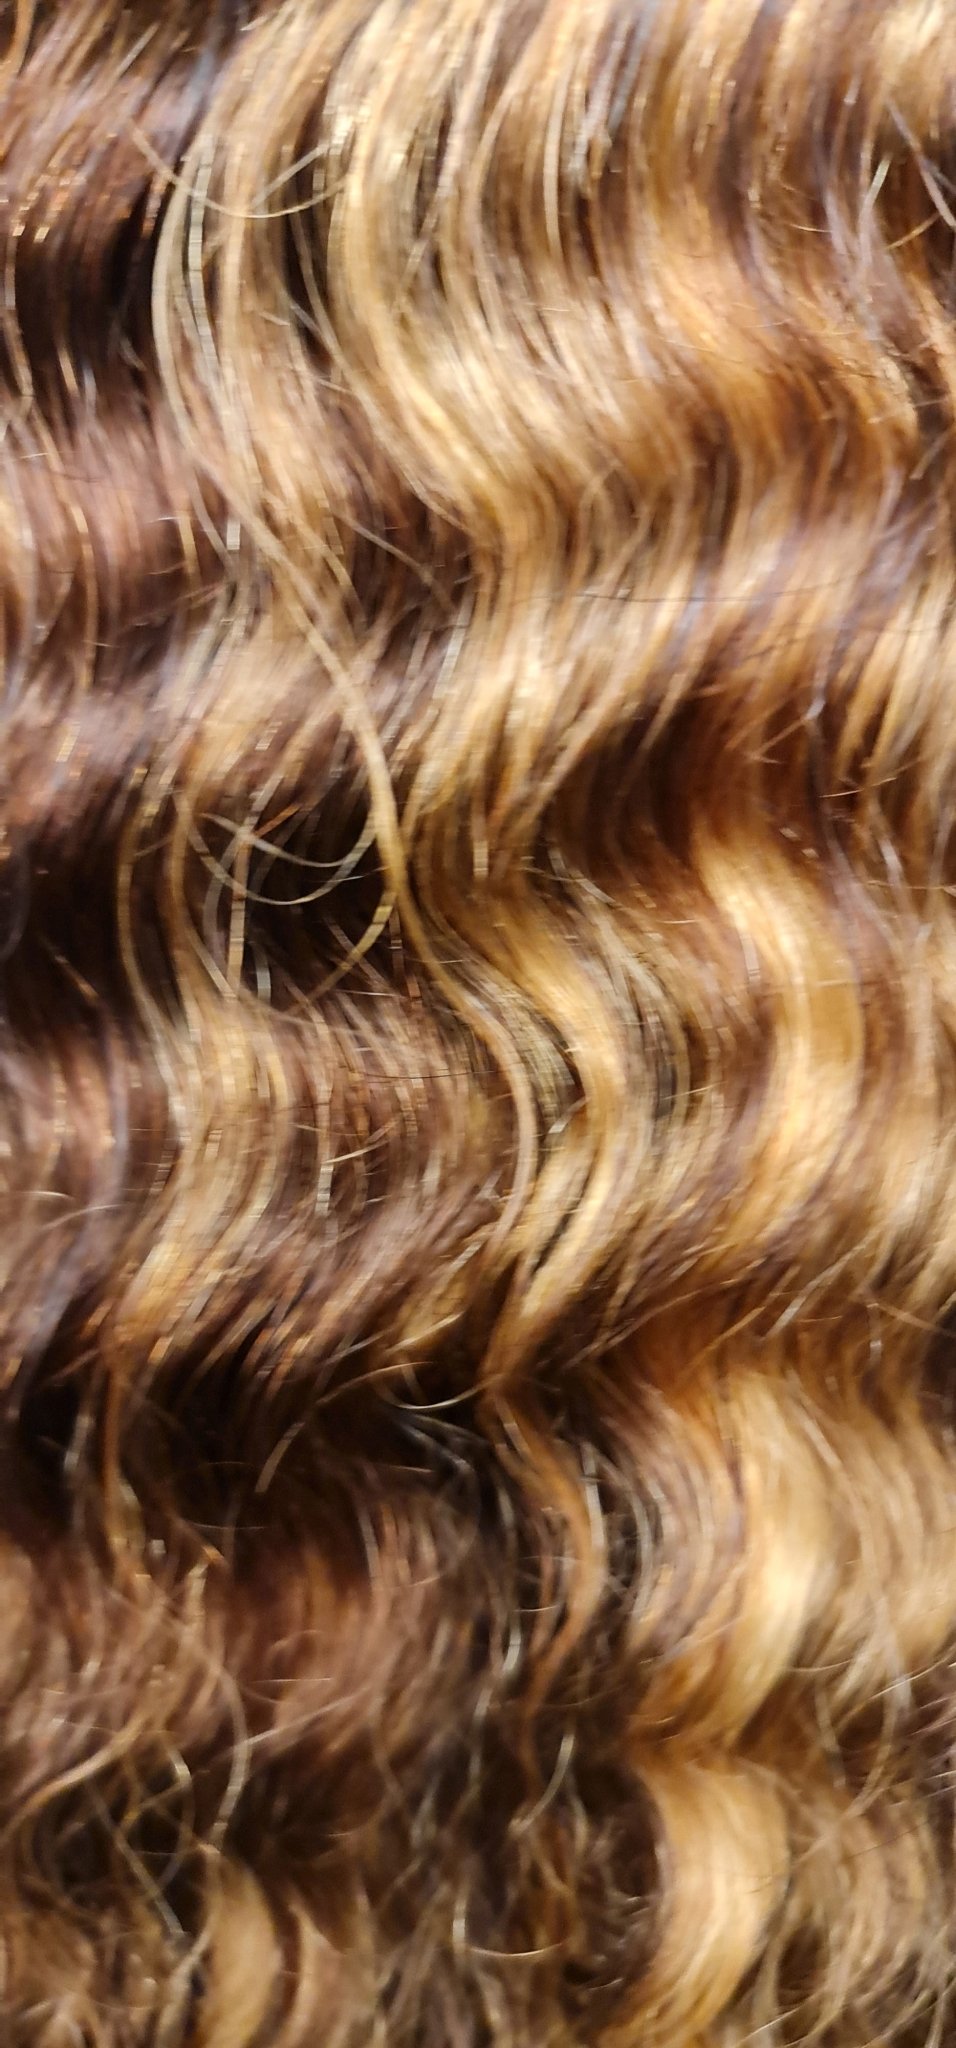 Perücke 24" 60cm Deep Wave mit Lace Frontal 13x4 Farbe P4/27Diosa Extensions Haarverlängerungen